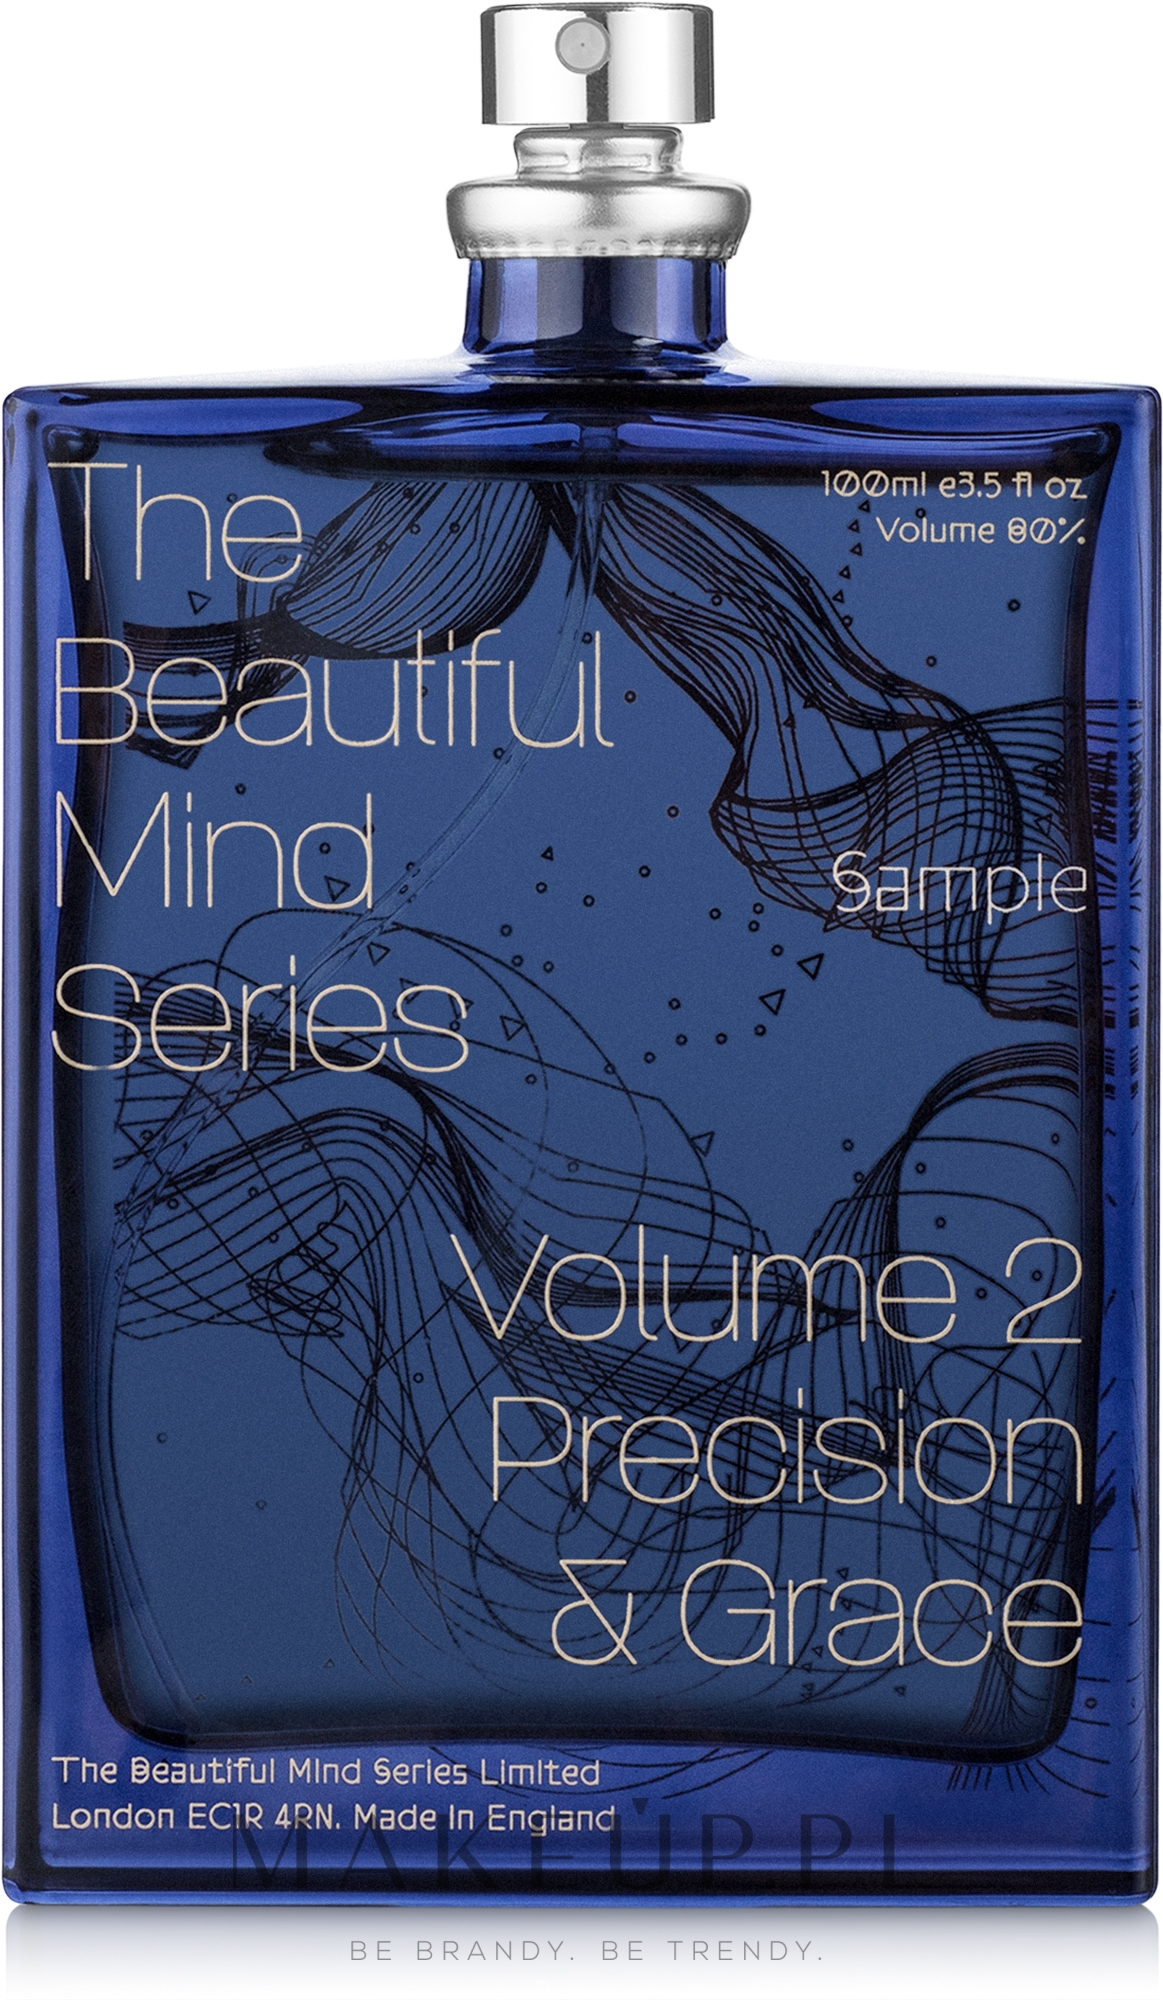 the beautiful mind series volume 2 - precision & grace